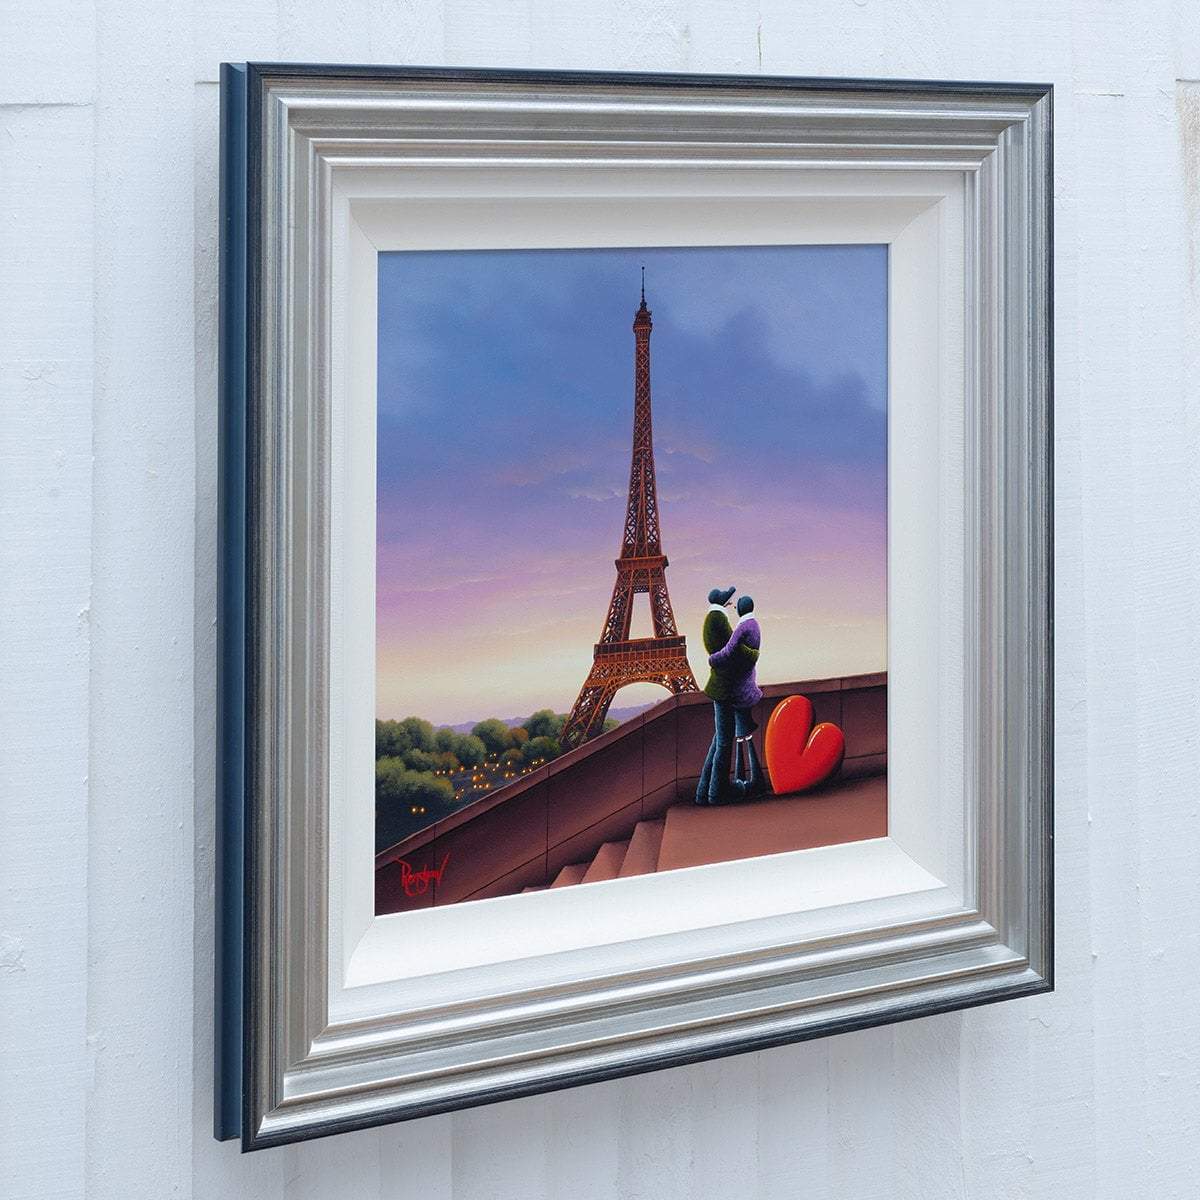 In Paris With You - Original - SOLD